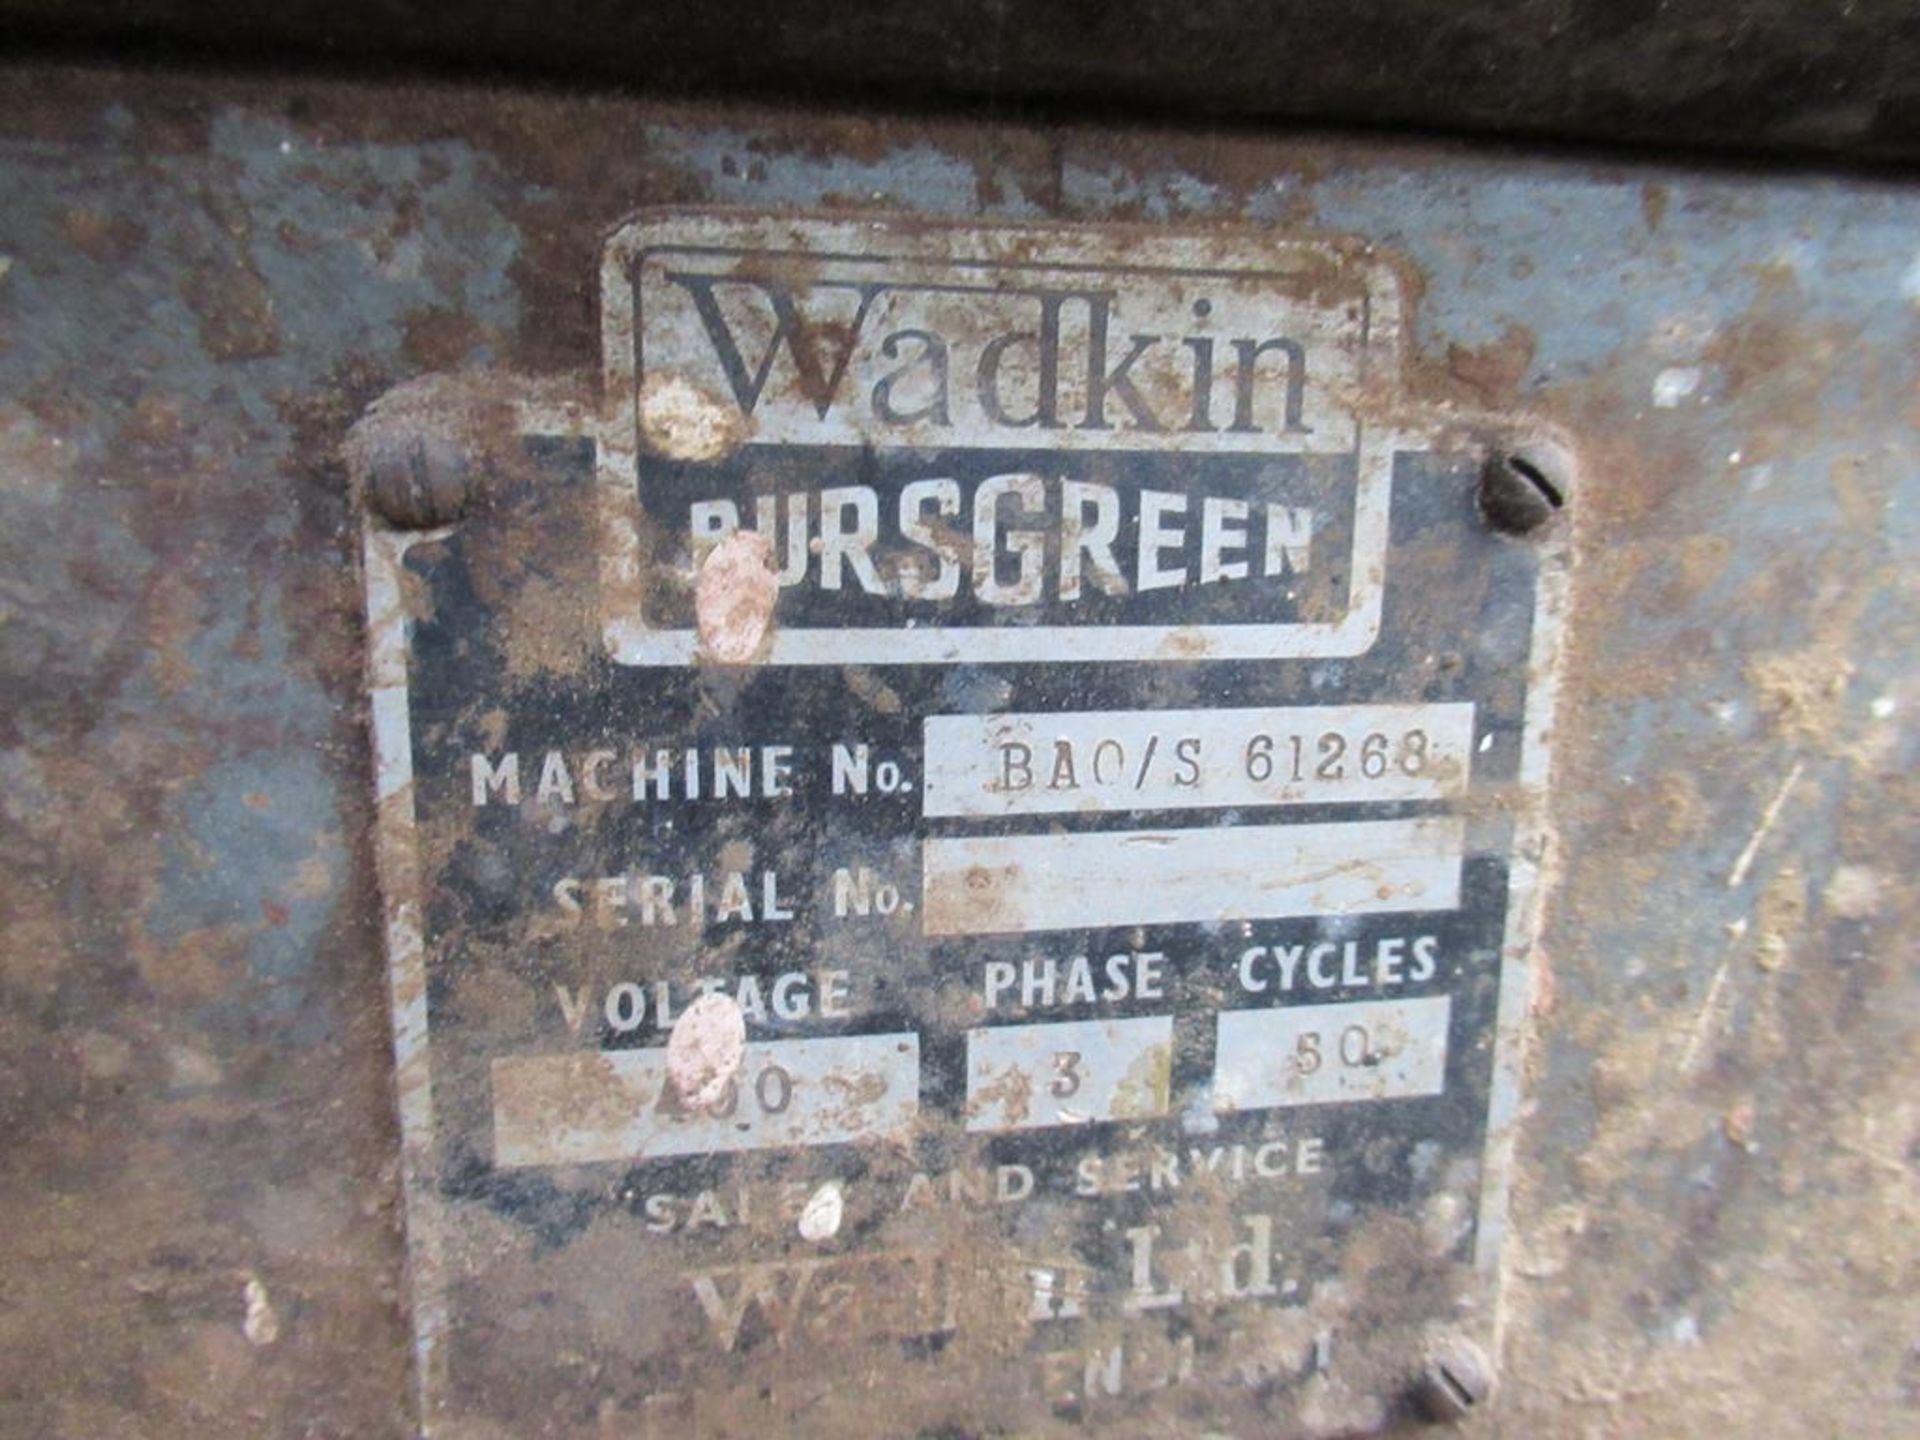 Wadkin 12 x 7 BAO/S with DC brake - Image 9 of 11